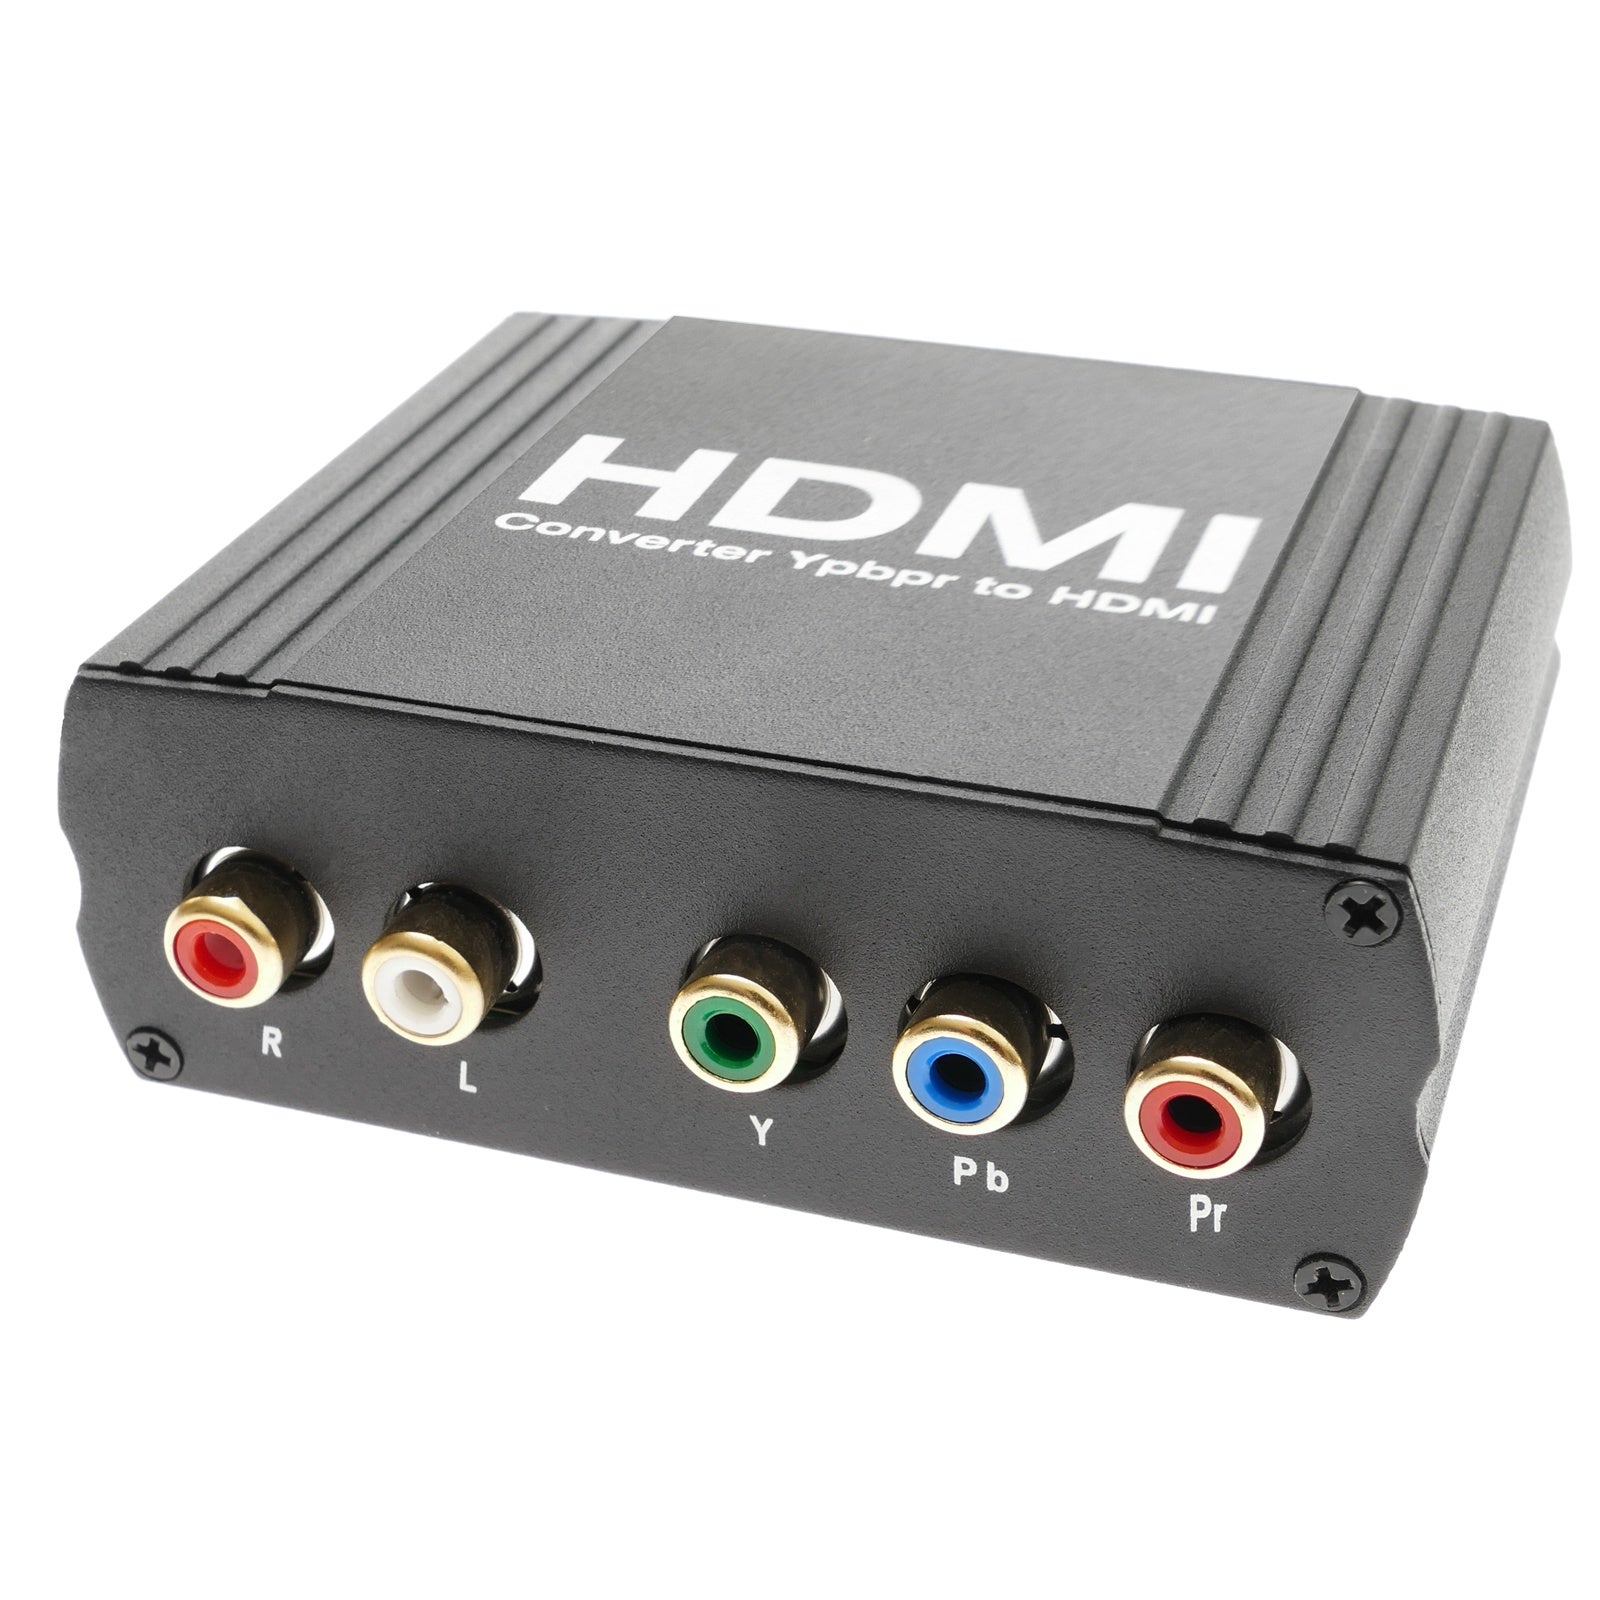 les convertisseurs HDMI / RJ45 